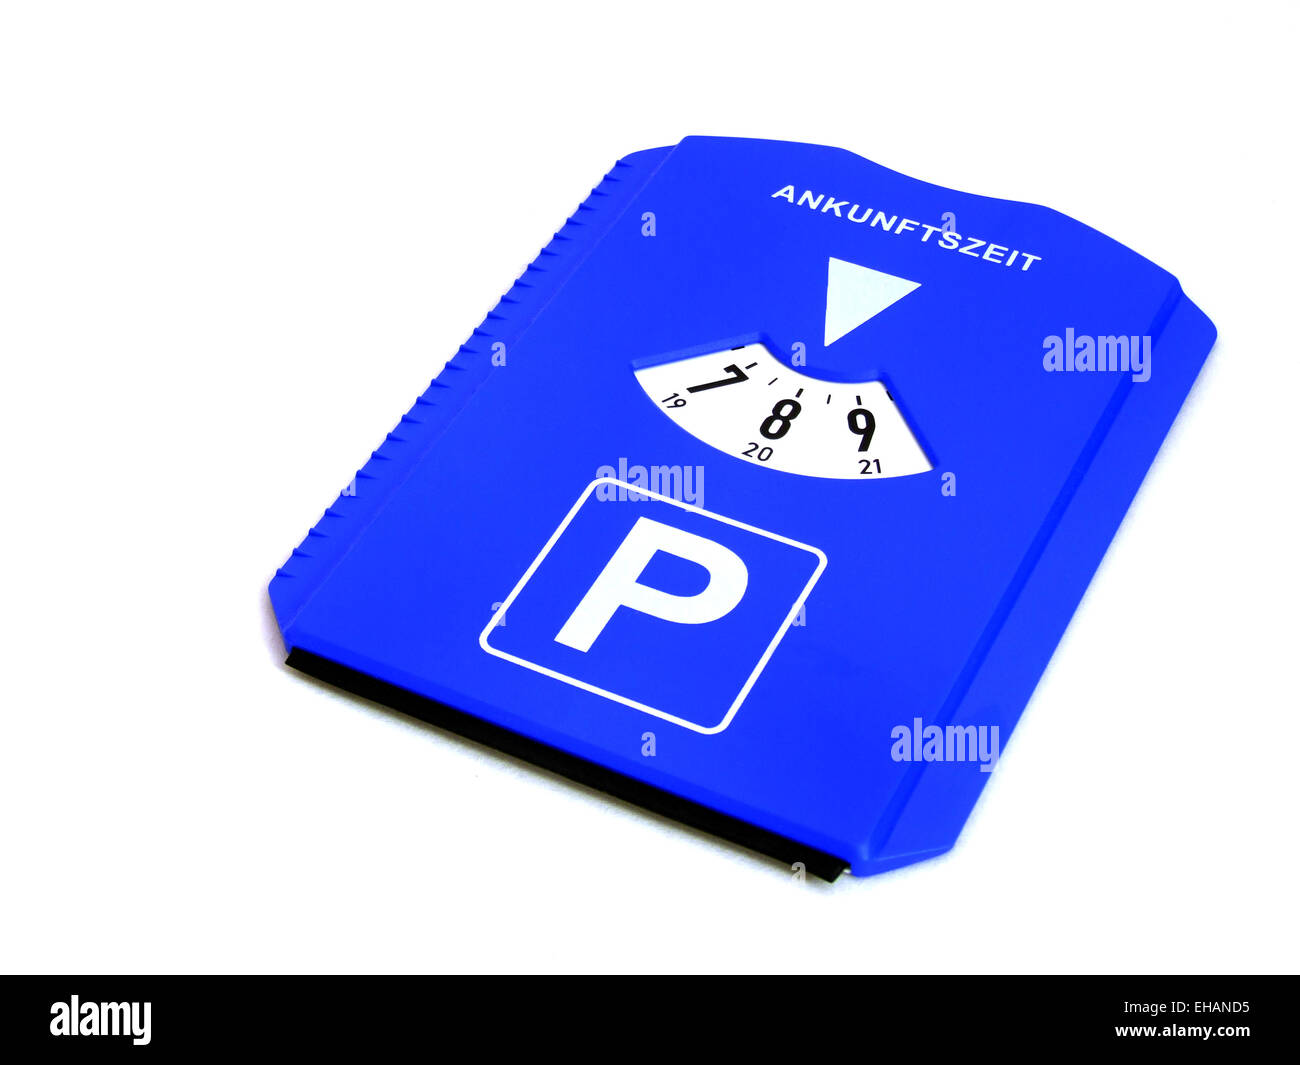 Parkscheibe / parking disk Stock Photo